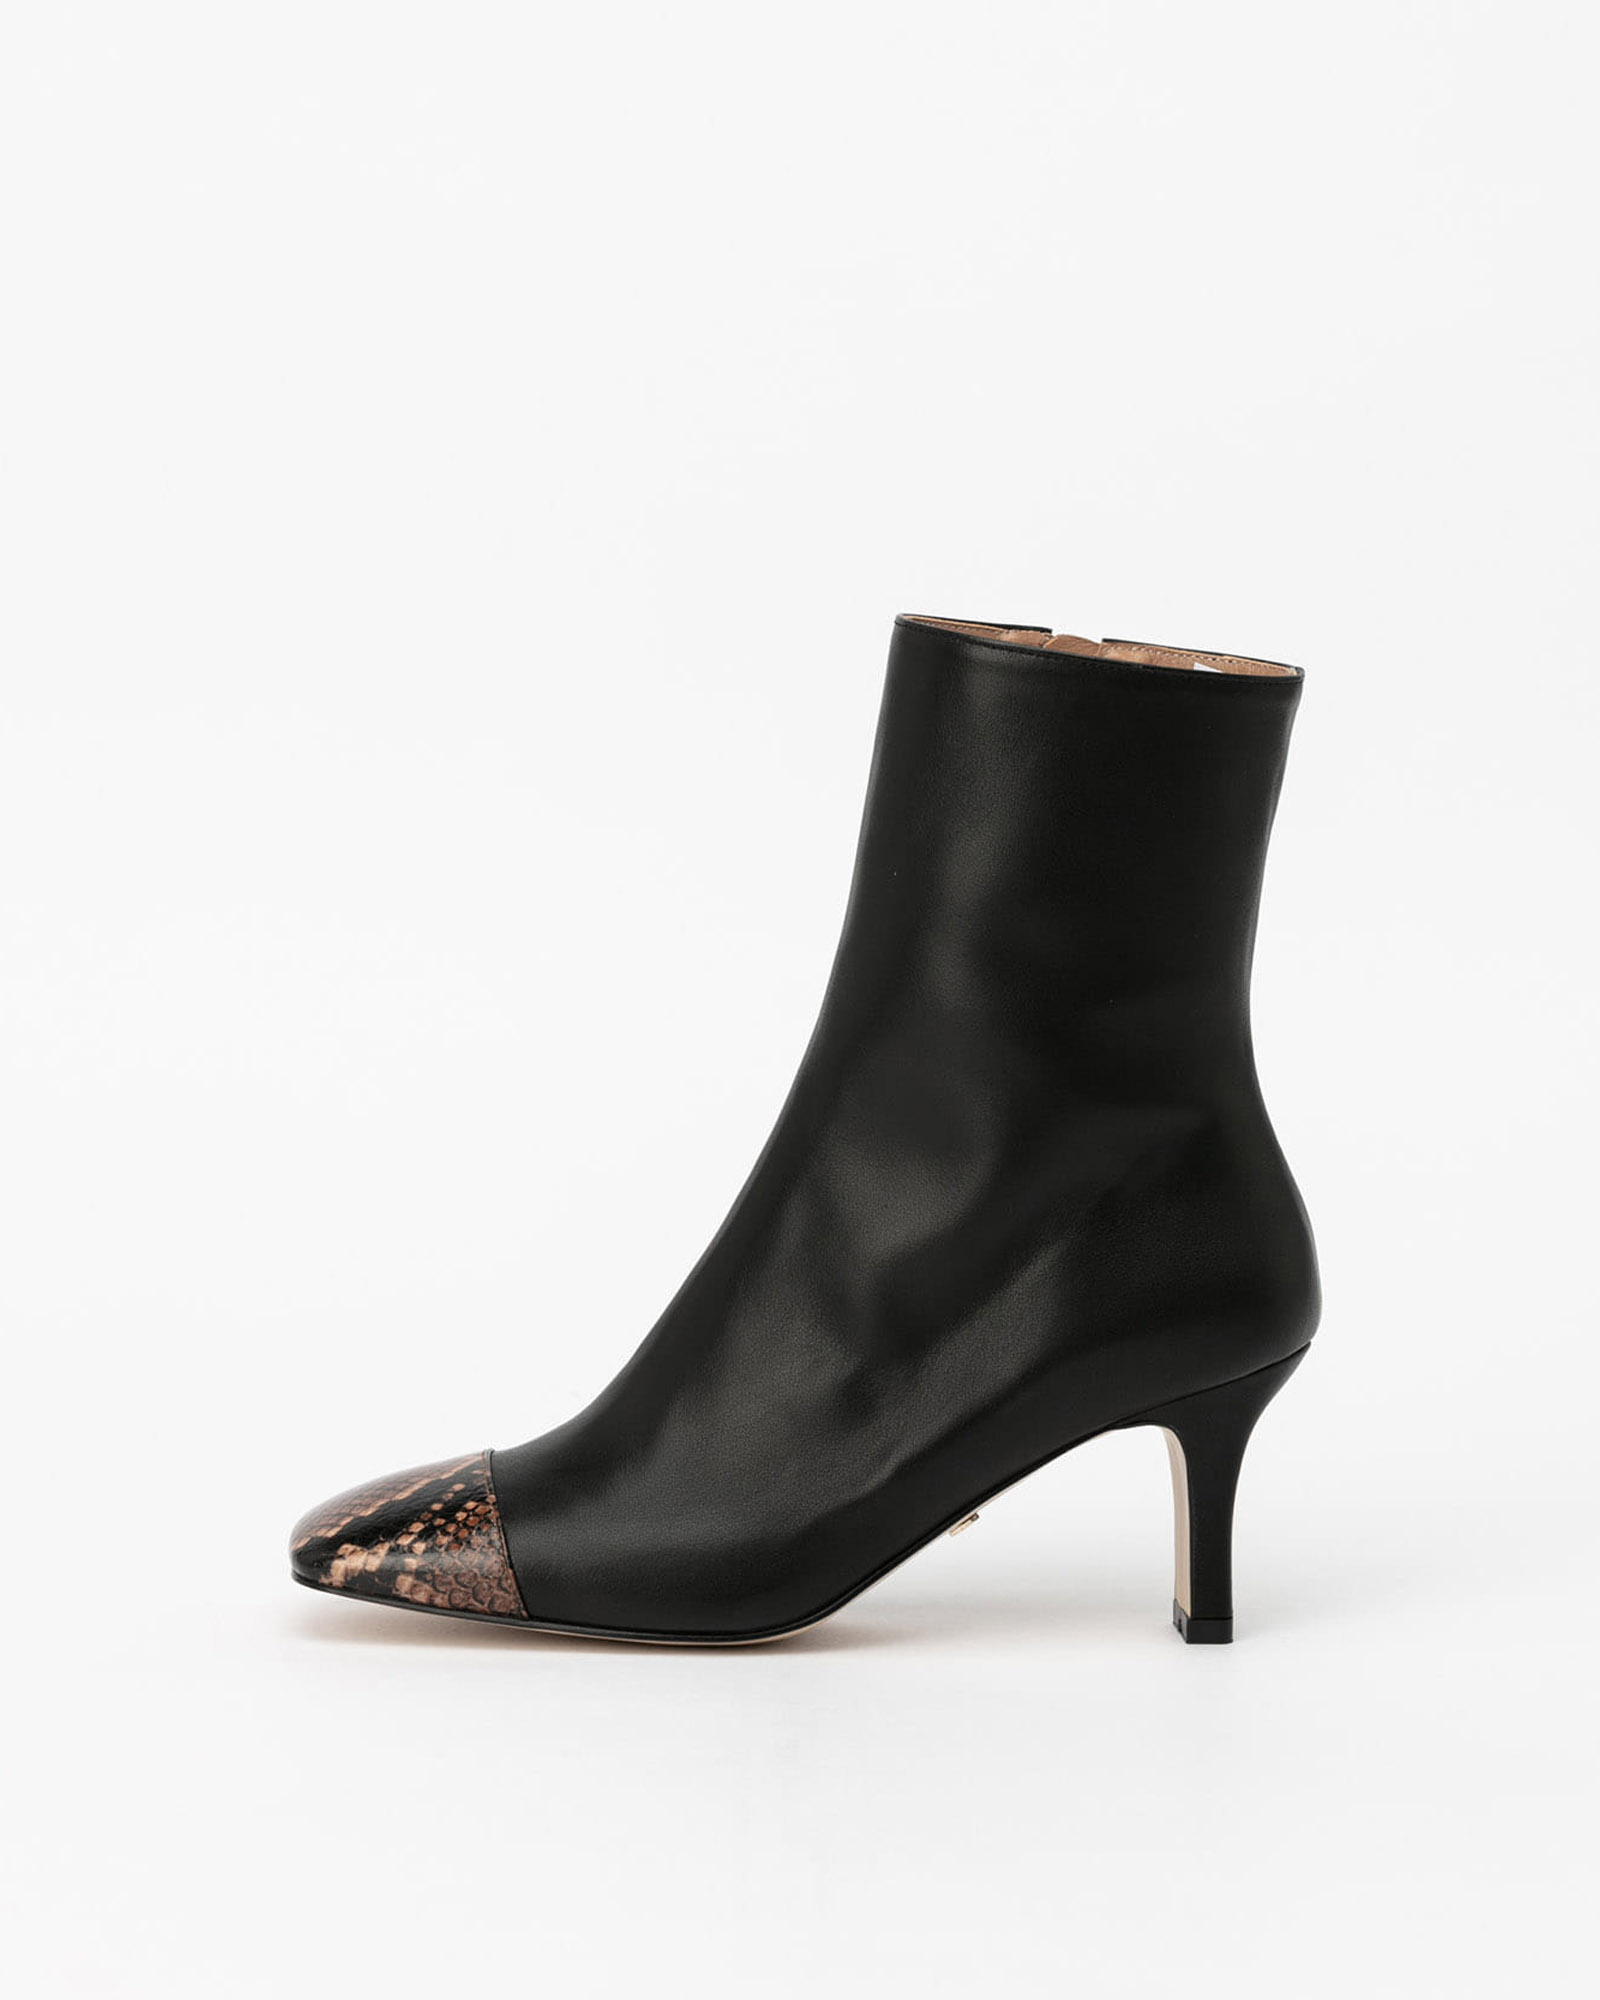 Grazia Boots in Black With Lava Python